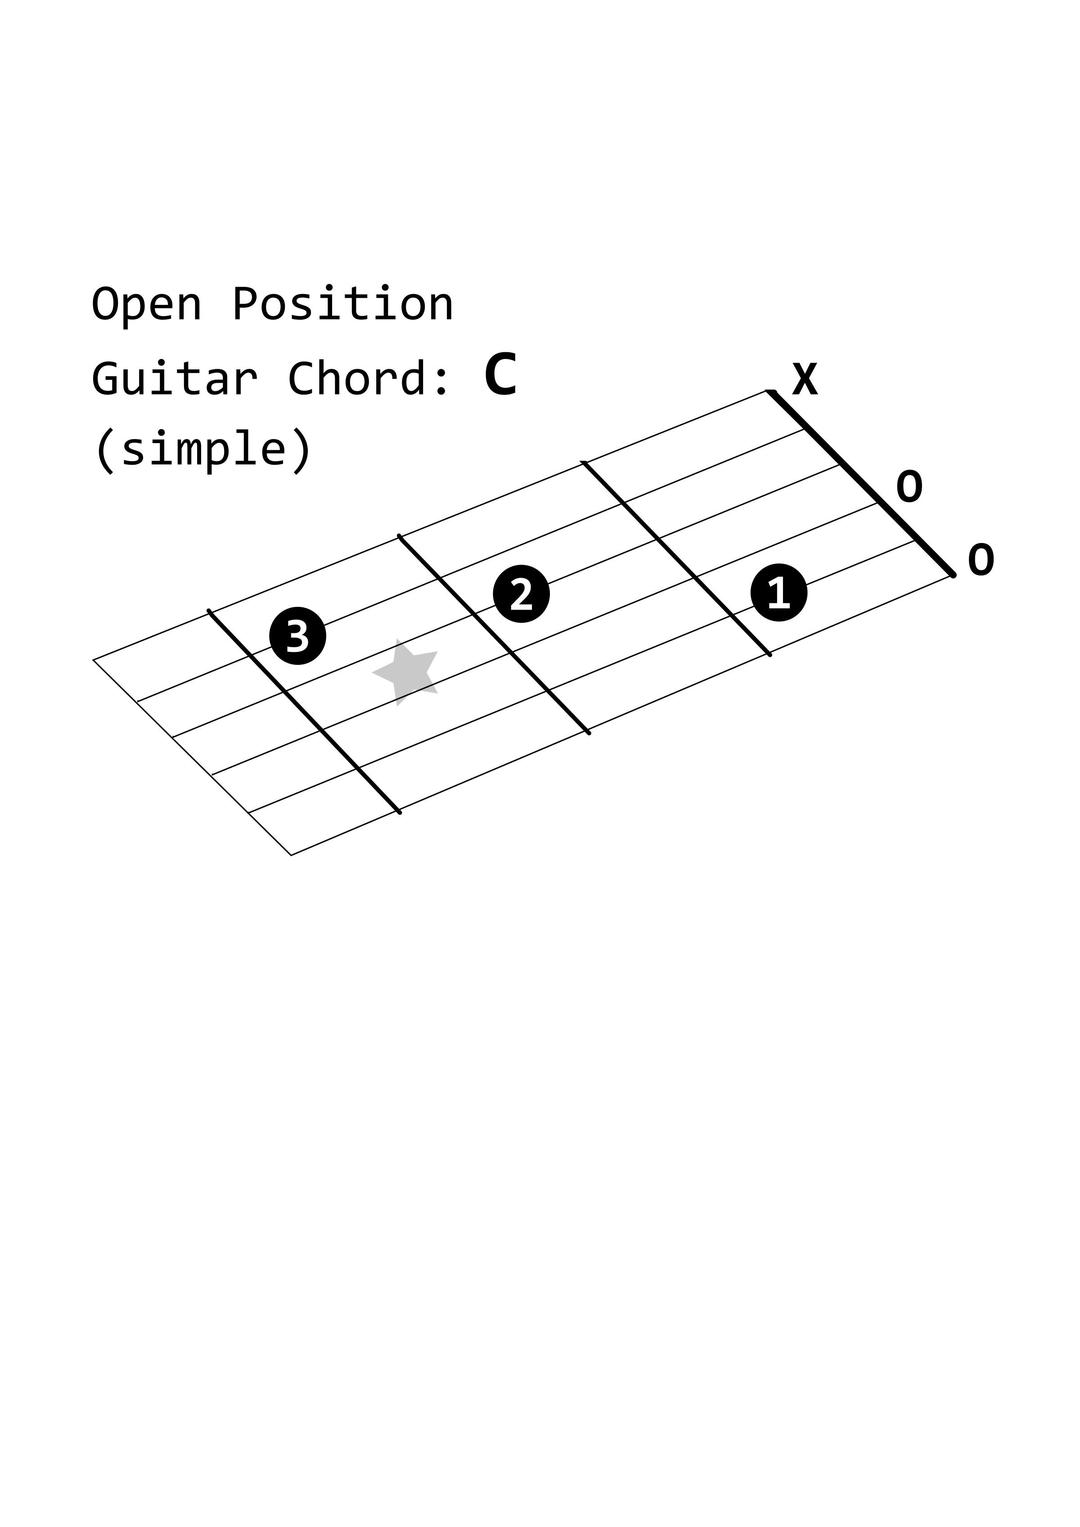 Open Position Guitar Chord: C (simple) png transparent